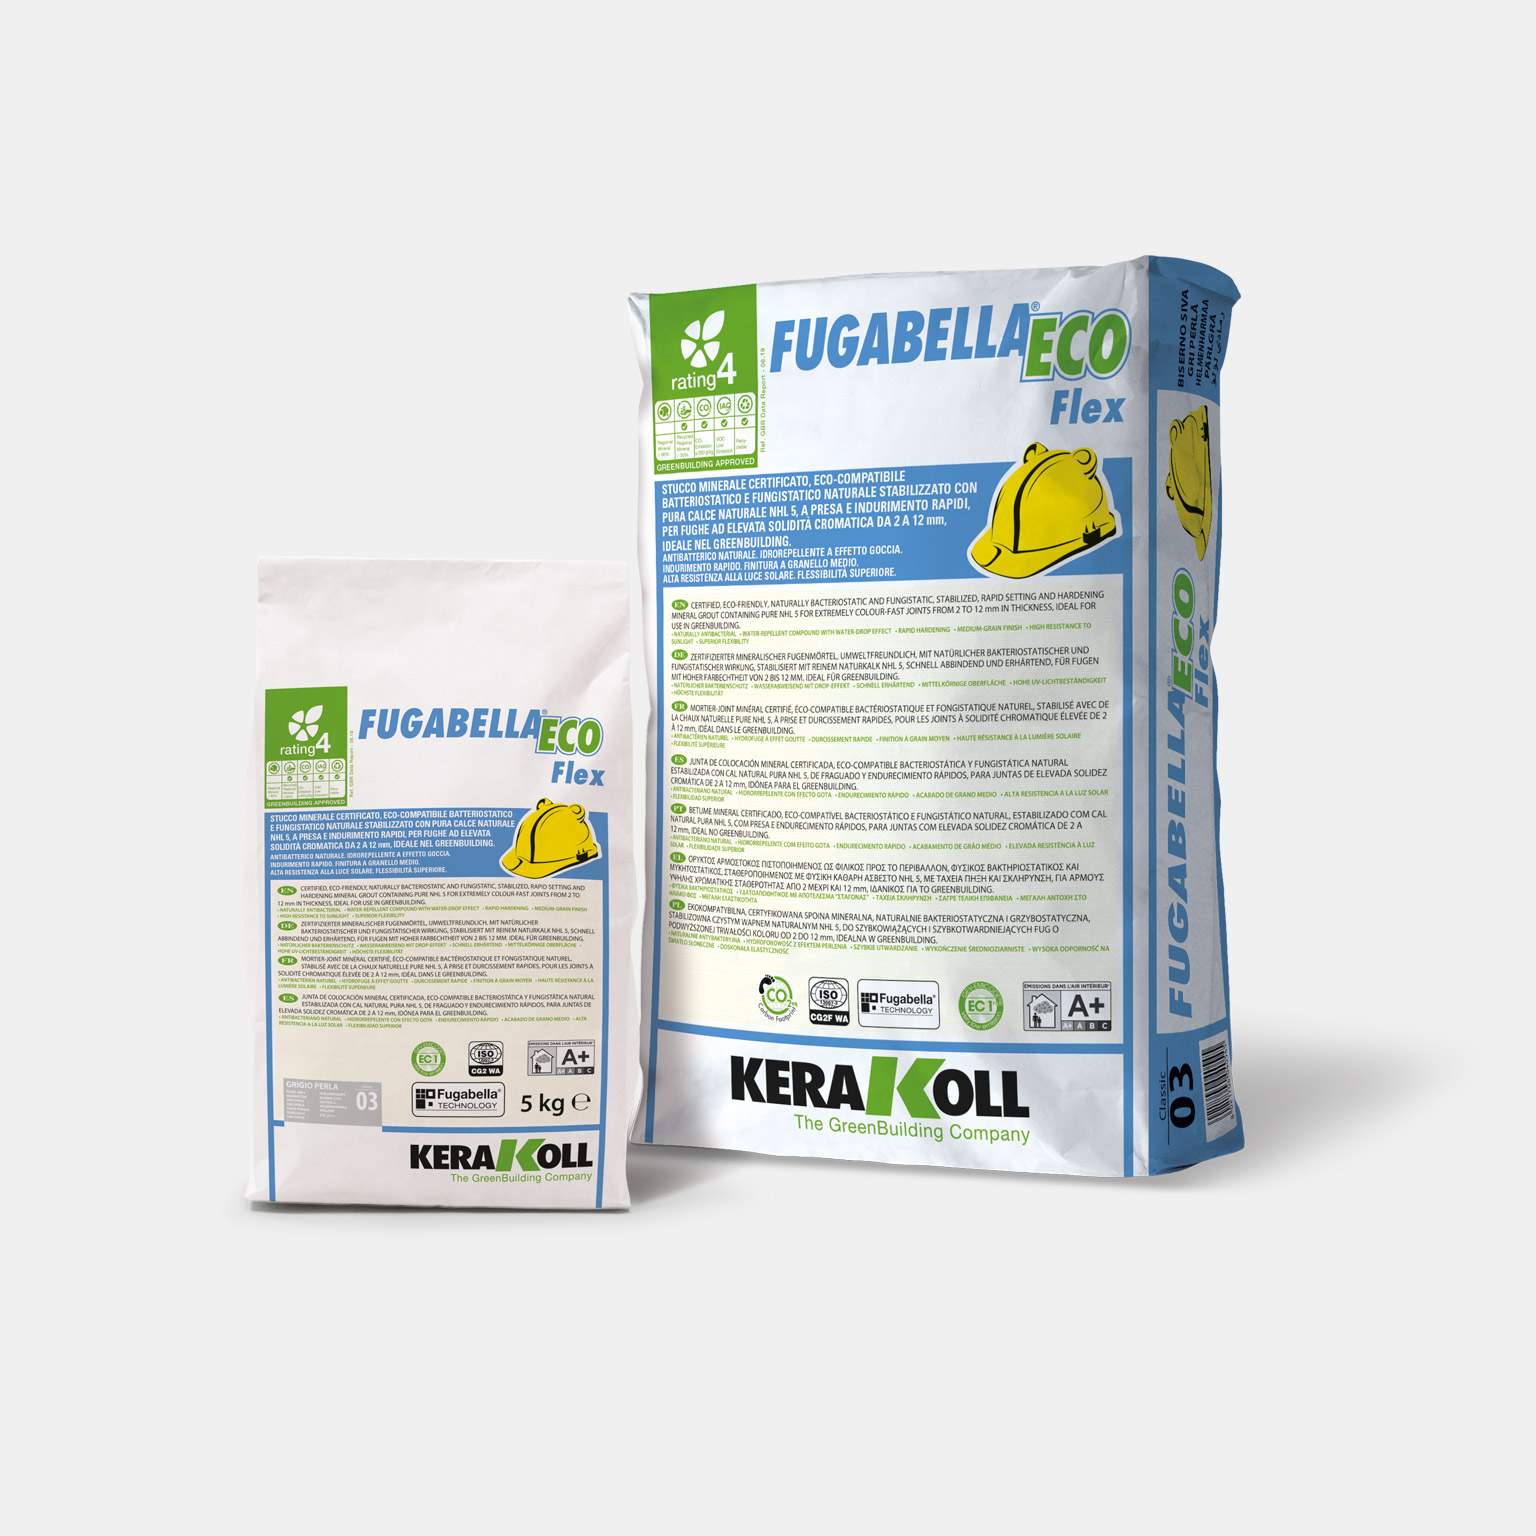 Fugabella Eco Flex - immagine pack